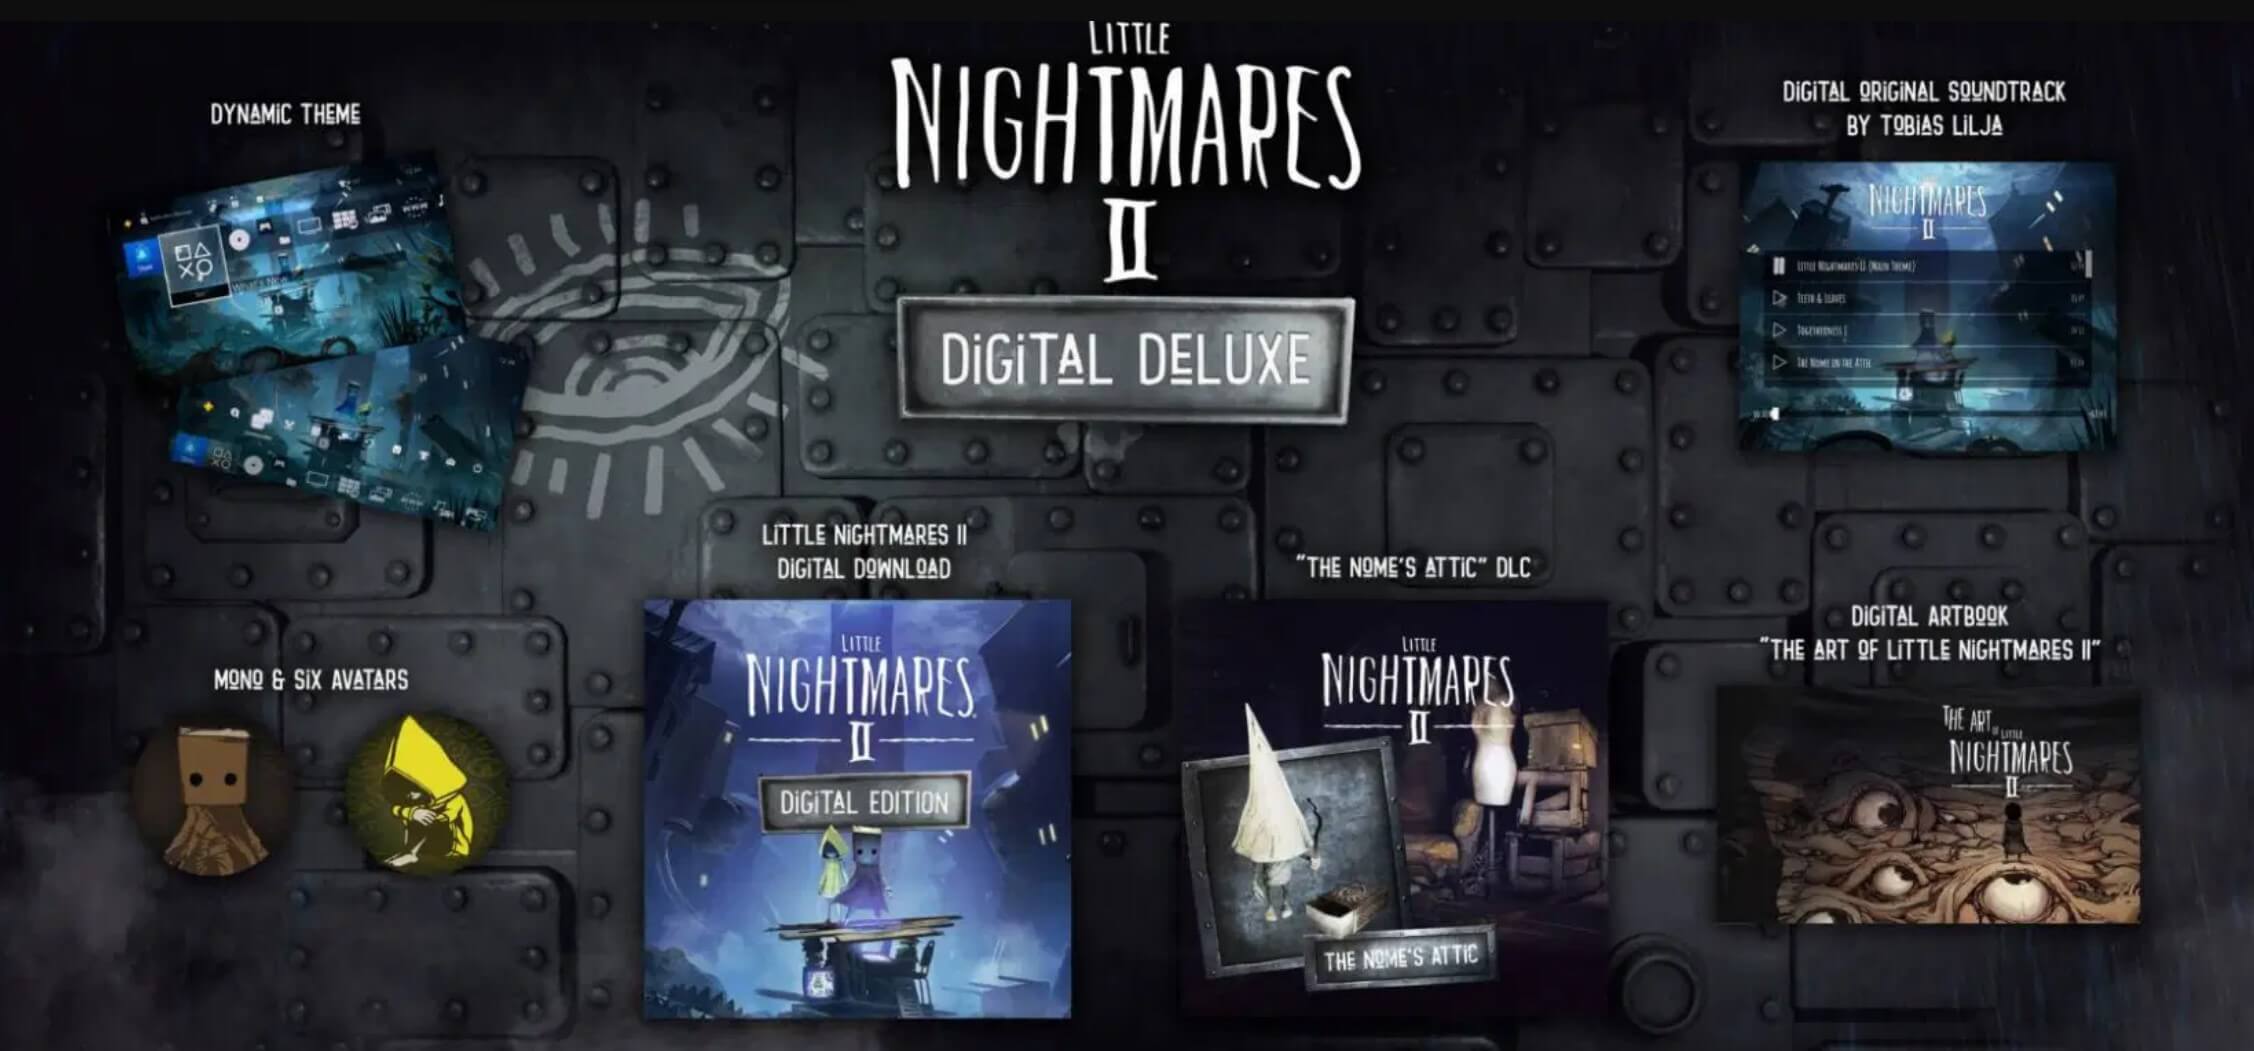 65% Little Nightmares II - Deluxe Edition on